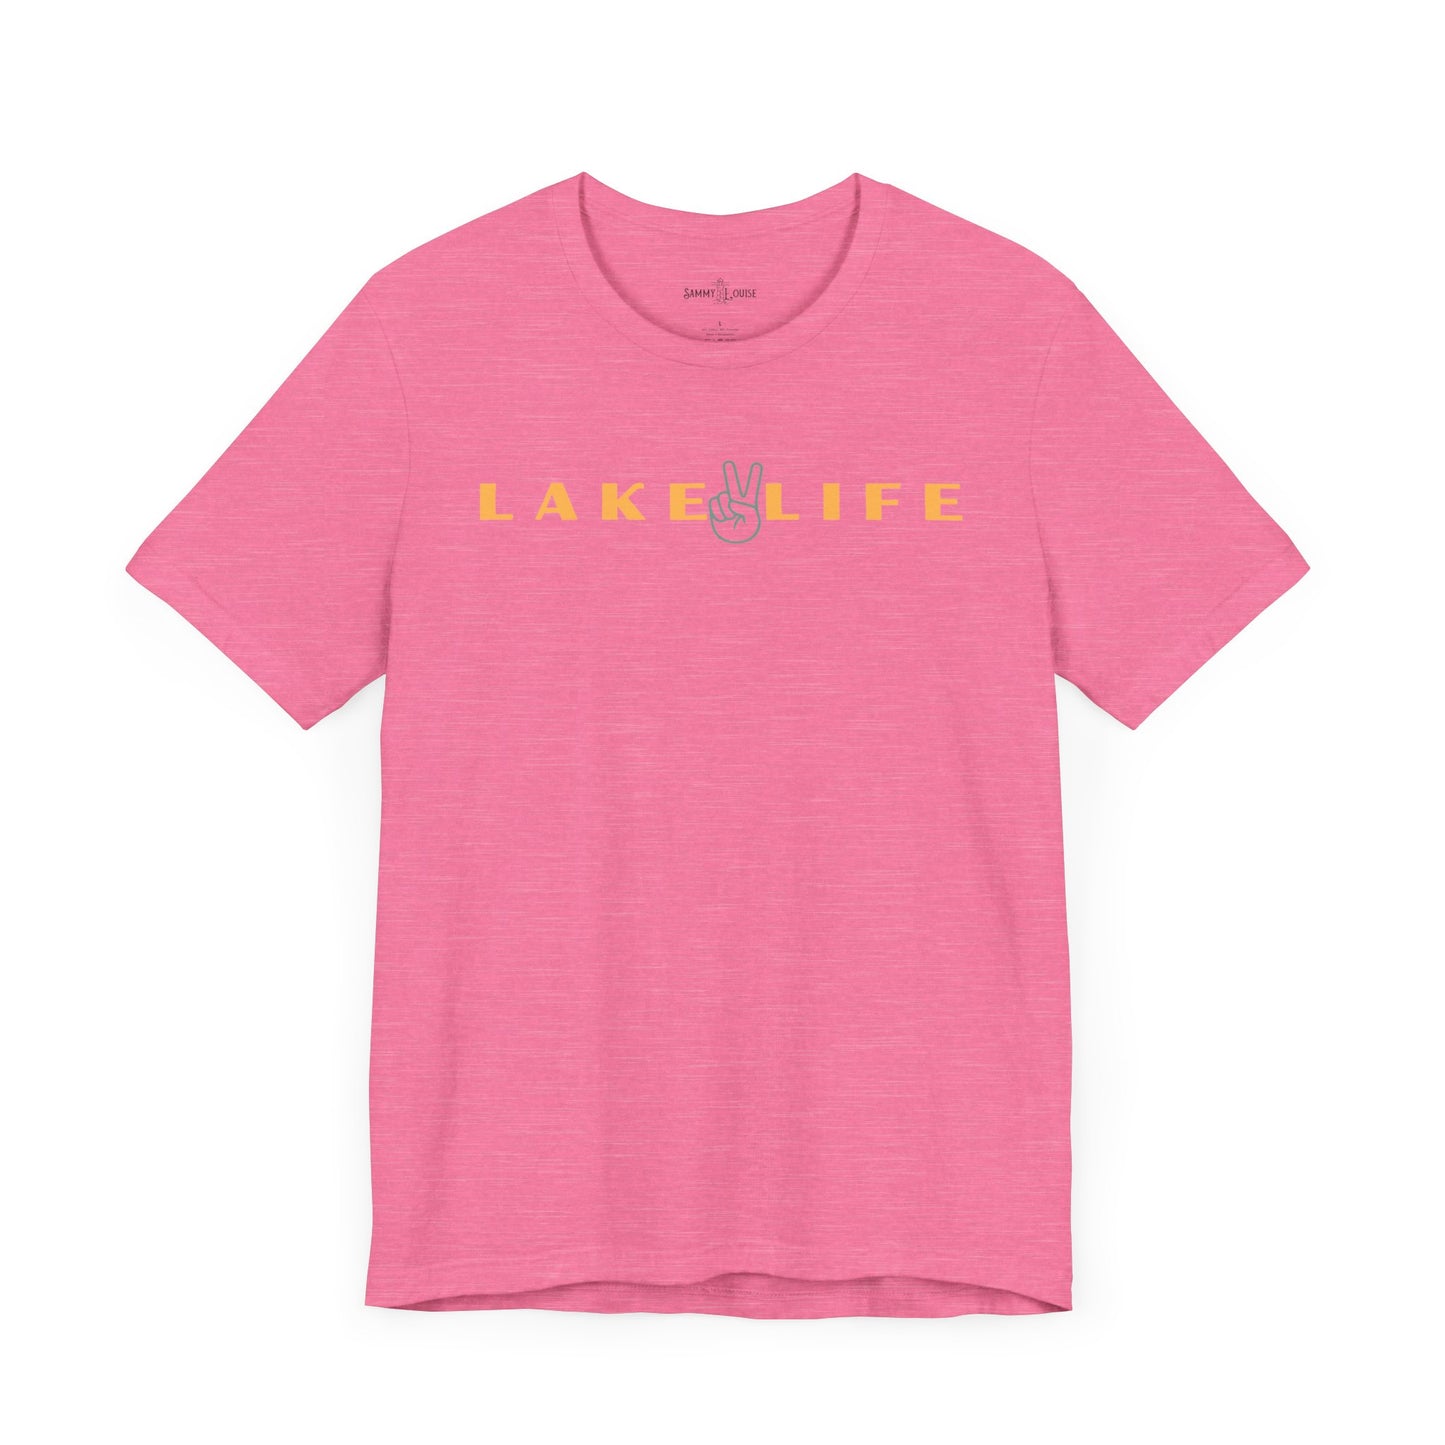 Lake Life | Best Life | Tee